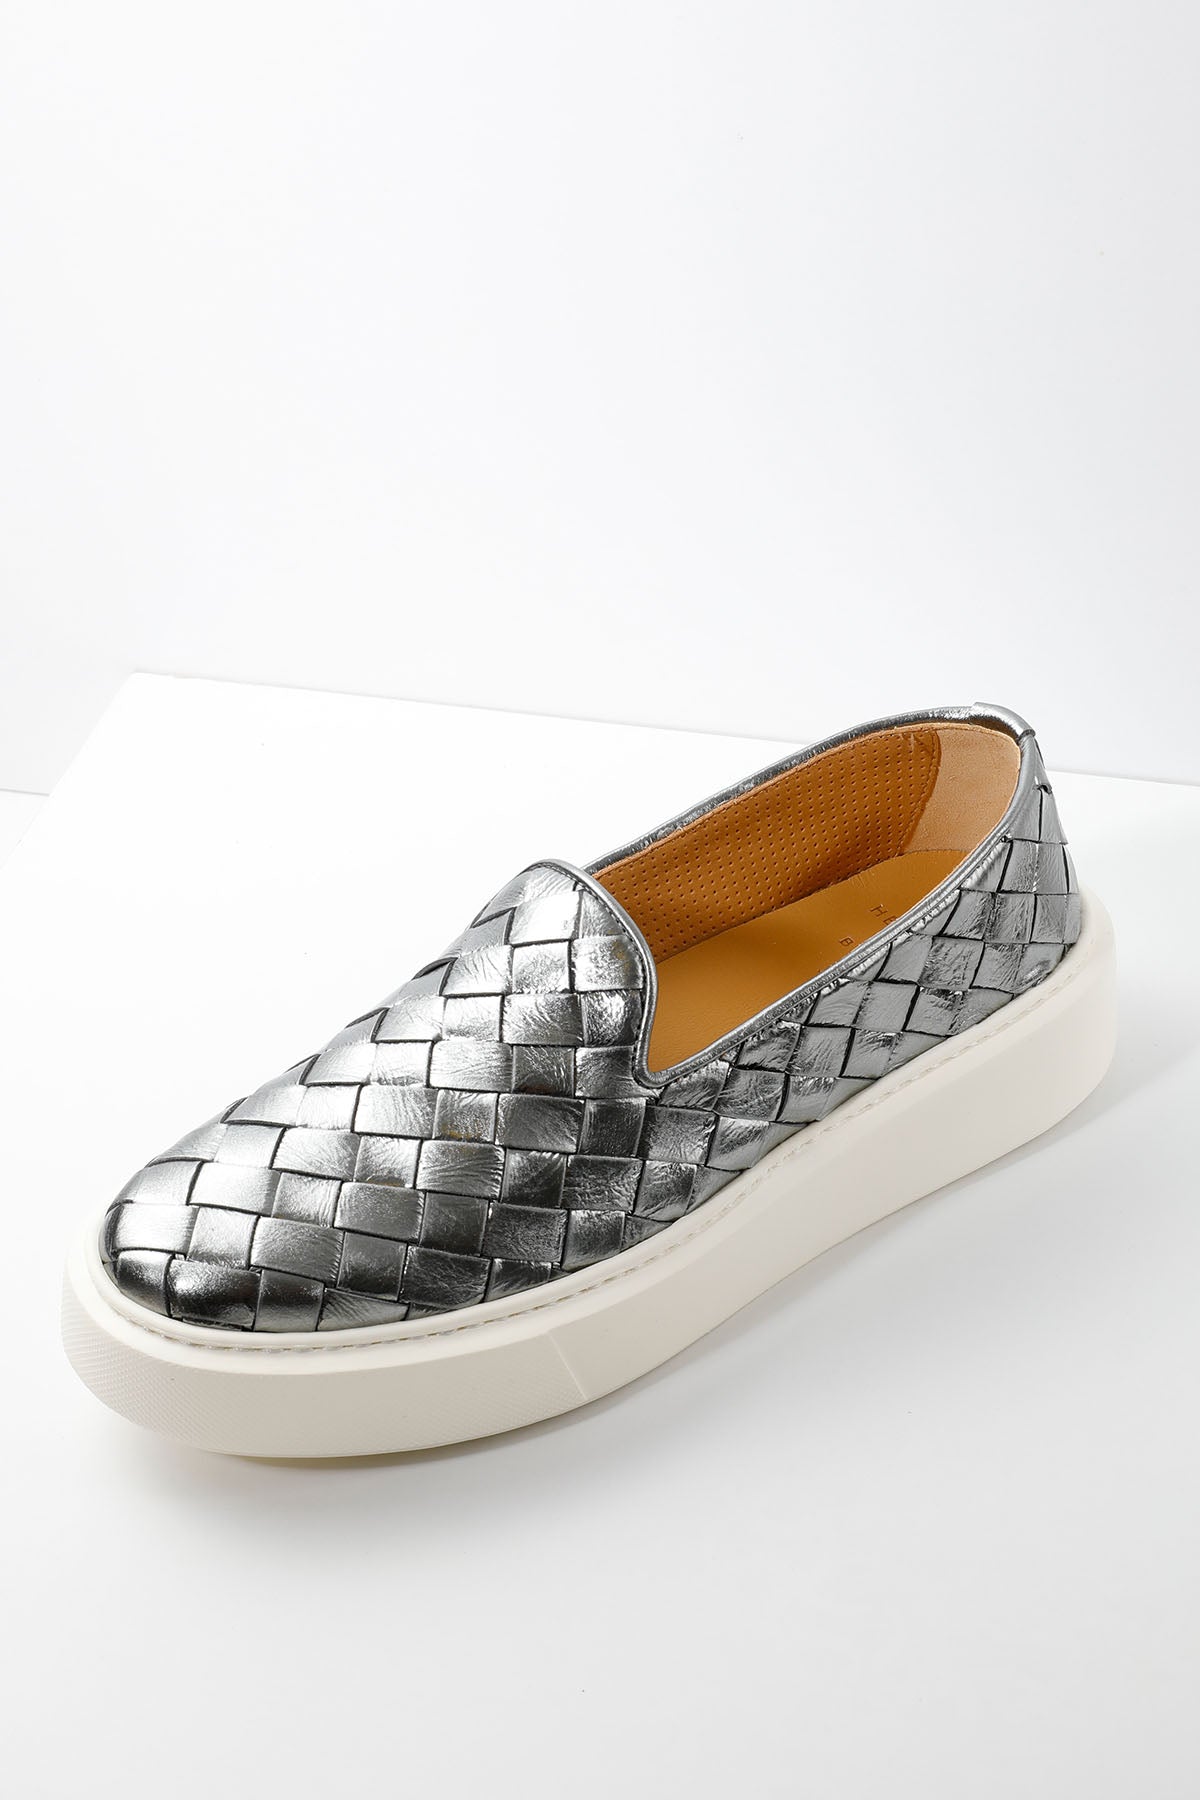 Henderson Jole Extralight Örgü Deri Loafer Ayakkabı-Libas Trendy Fashion Store